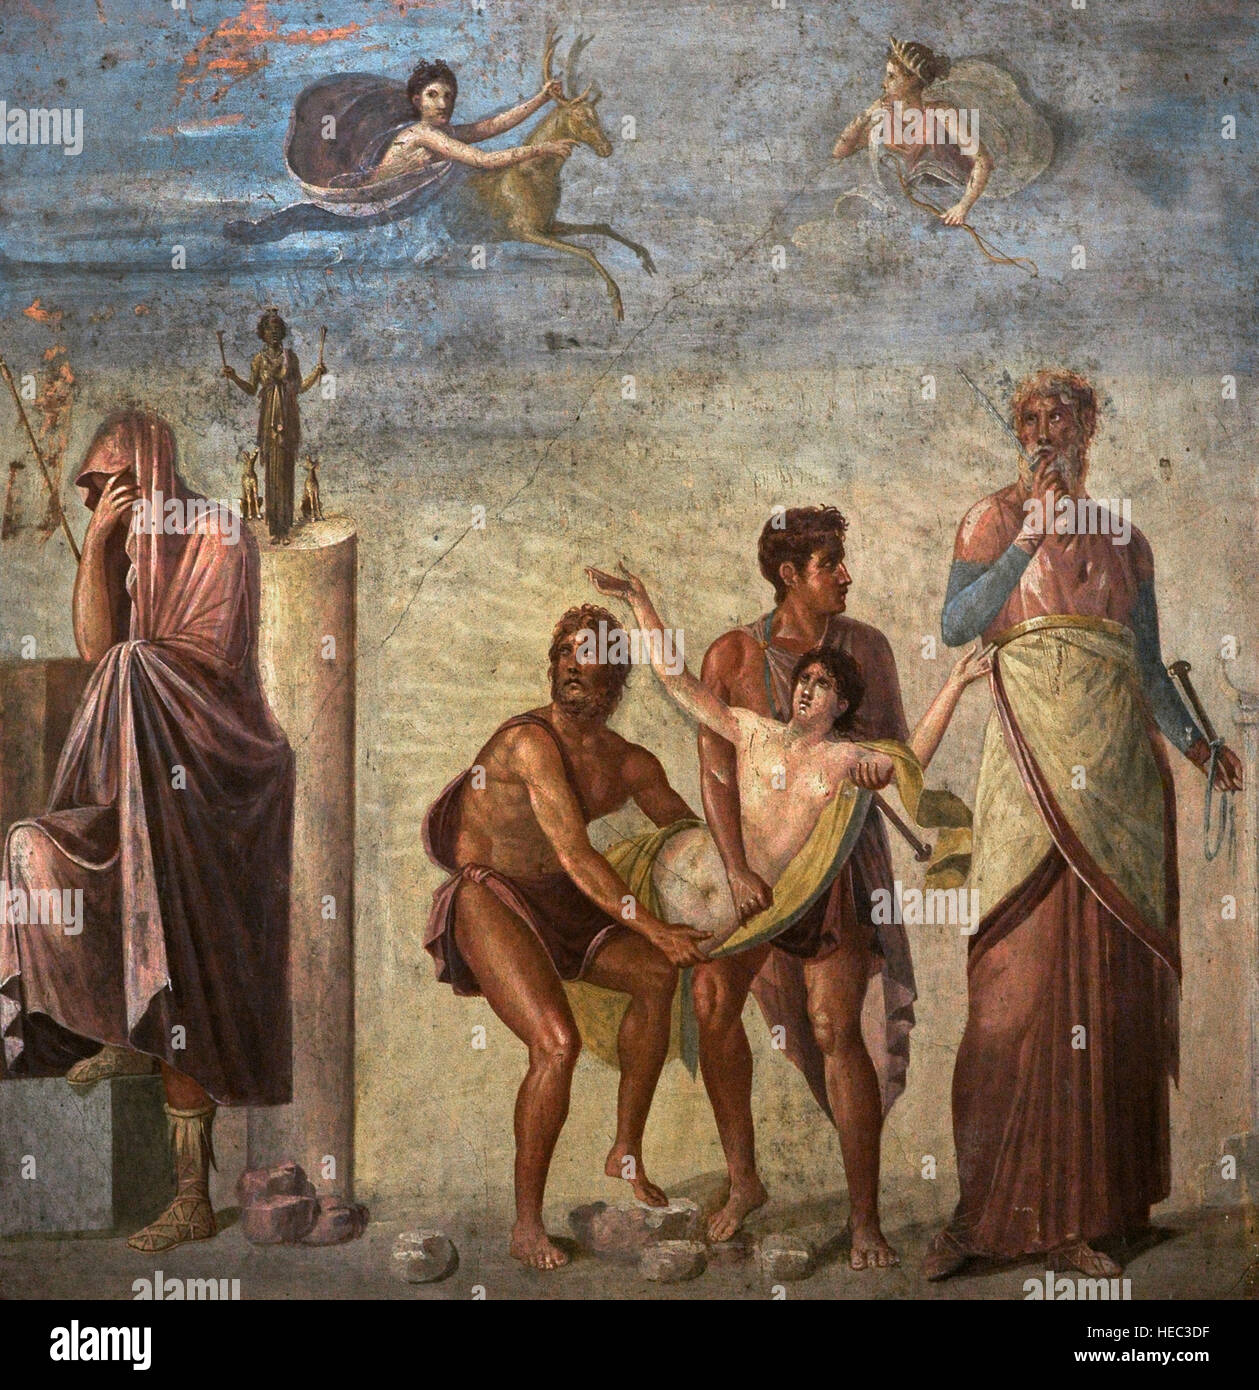 The Sacrifice of Iphigenia. House of the Tragic Poet. Pompeii, Italy. 1st century AD. National Archaeological Museum, Naples. Italy. Stock Photo